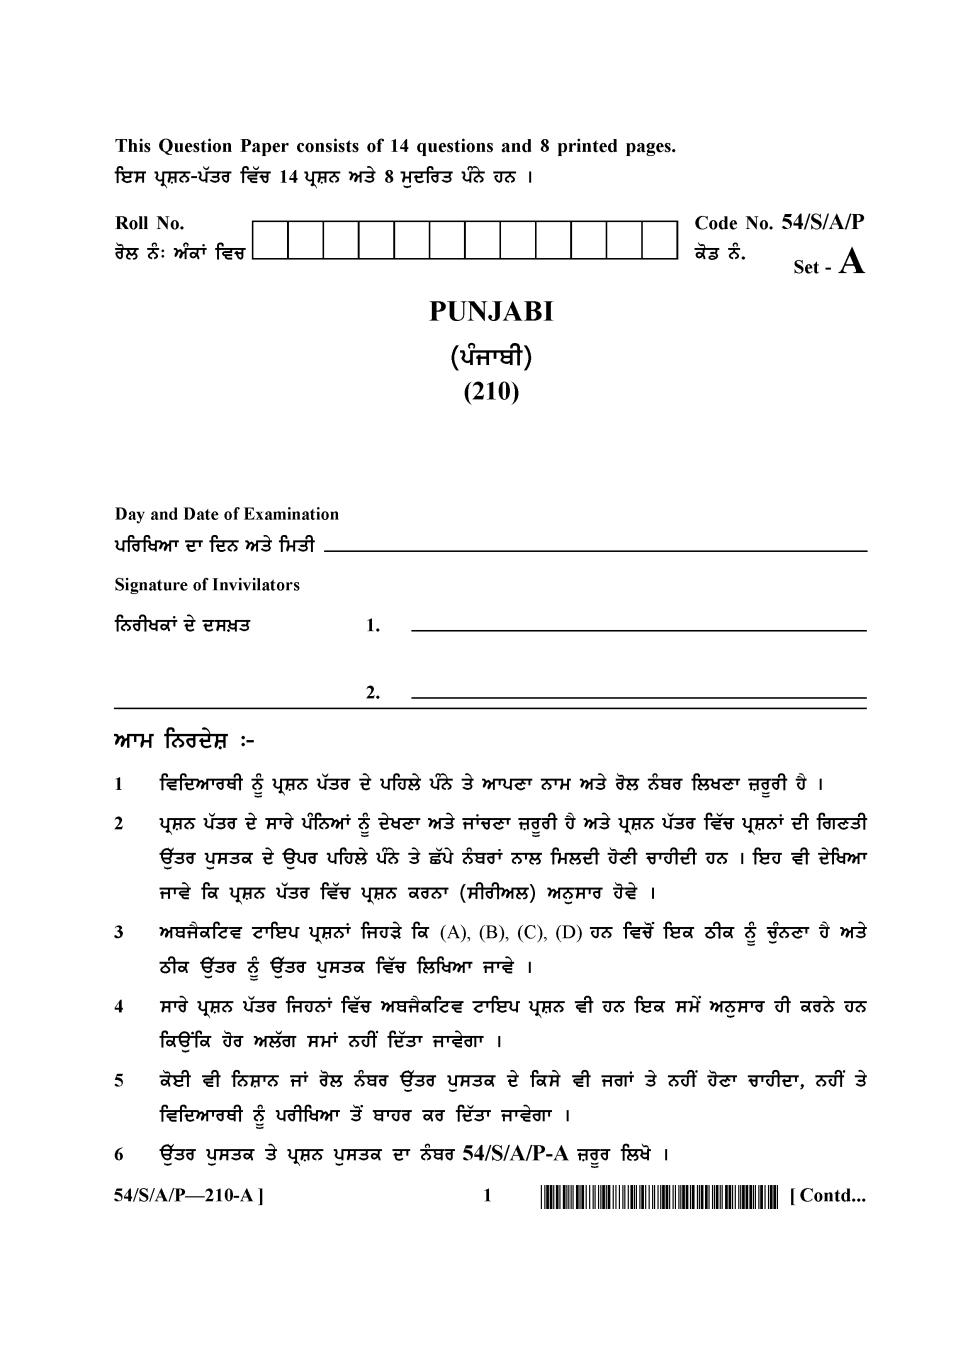 NIOS Class 10 Question Paper Apr 2017 - Punjabi - Page 1